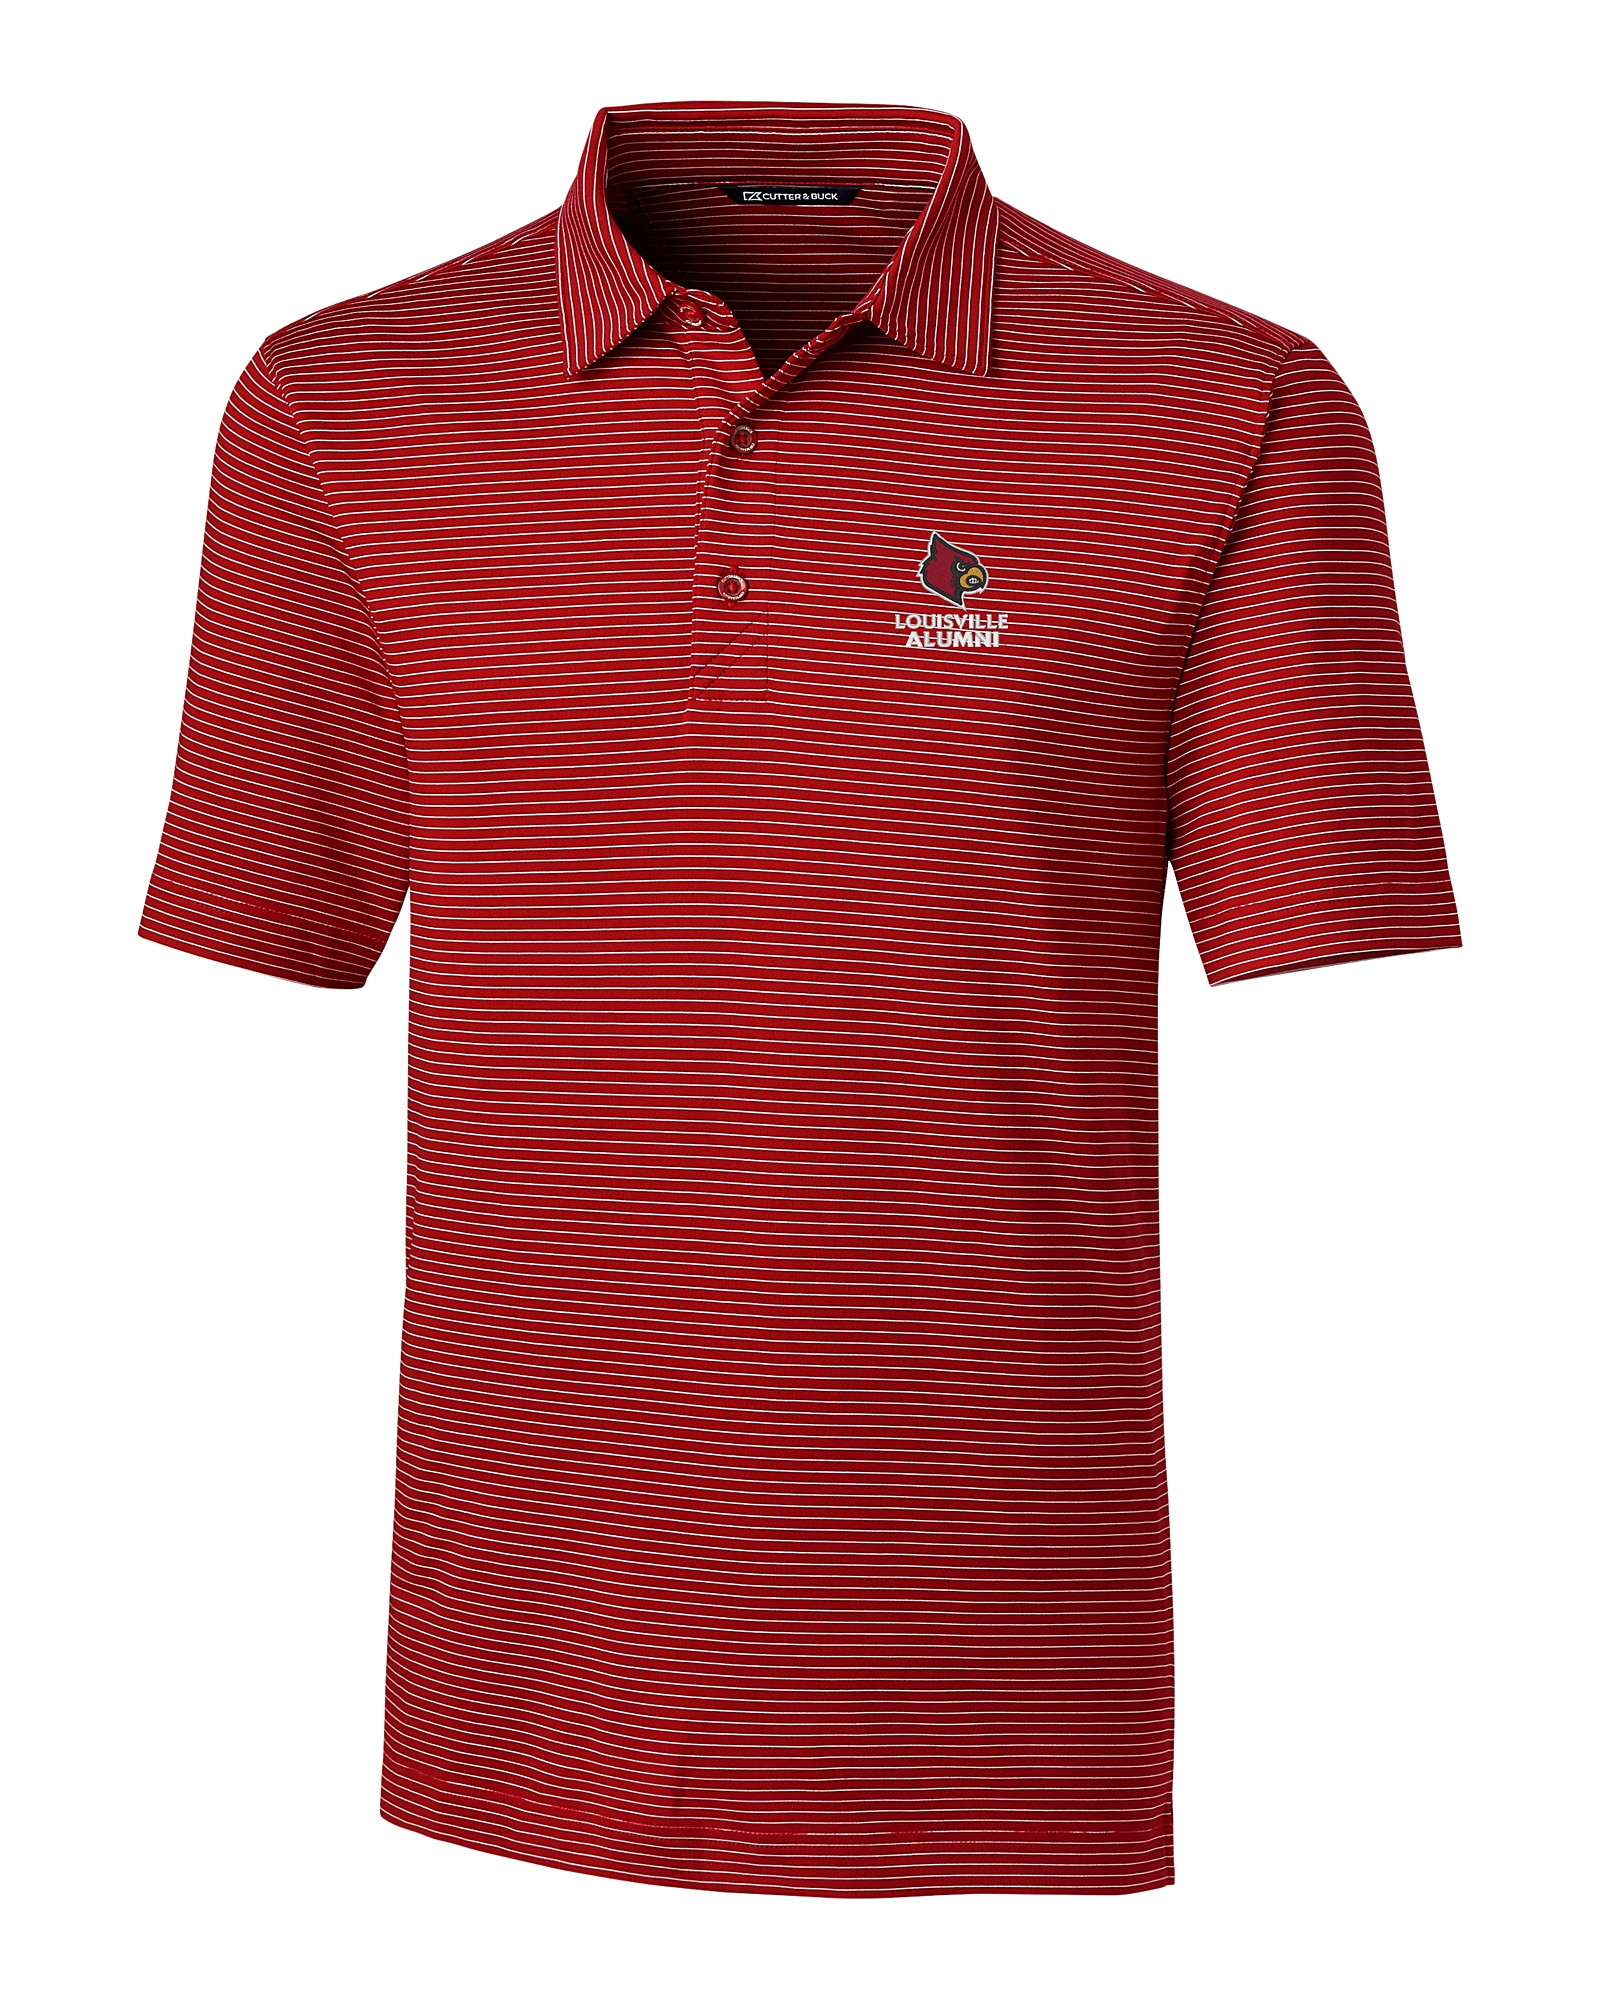 NCAA Louisville Cardinals Men's Classic-Fit Striped Polo Shirt